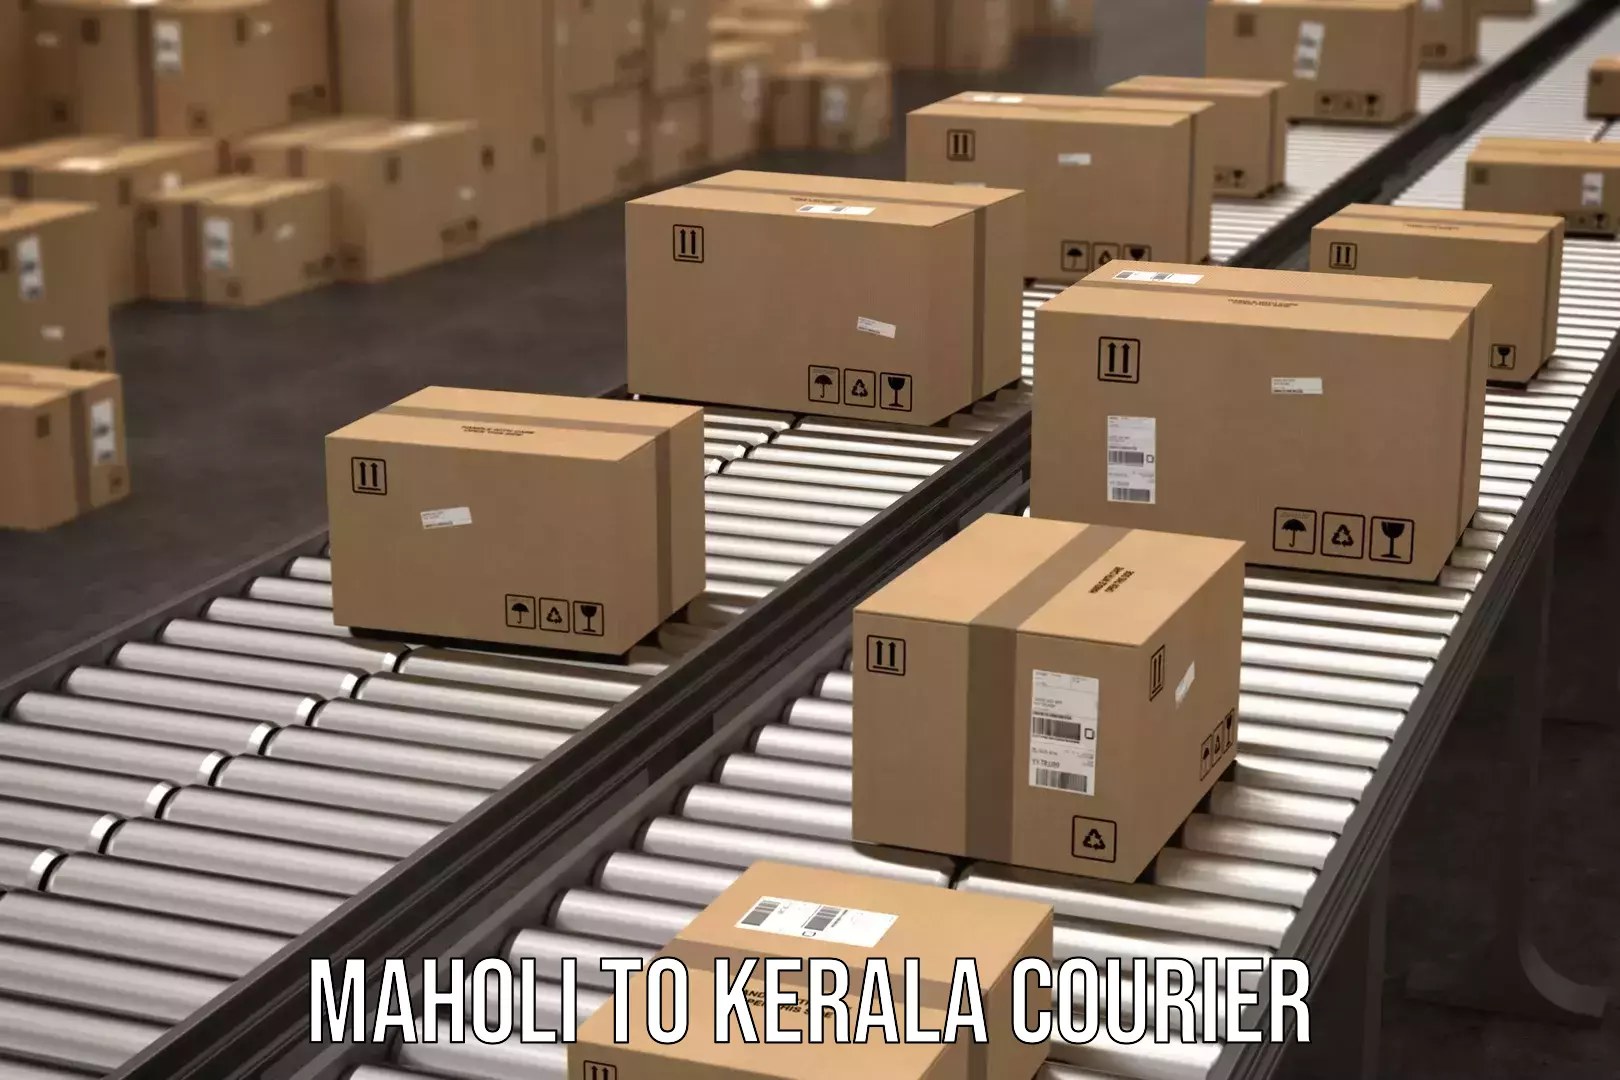 On-demand delivery Maholi to Kerala